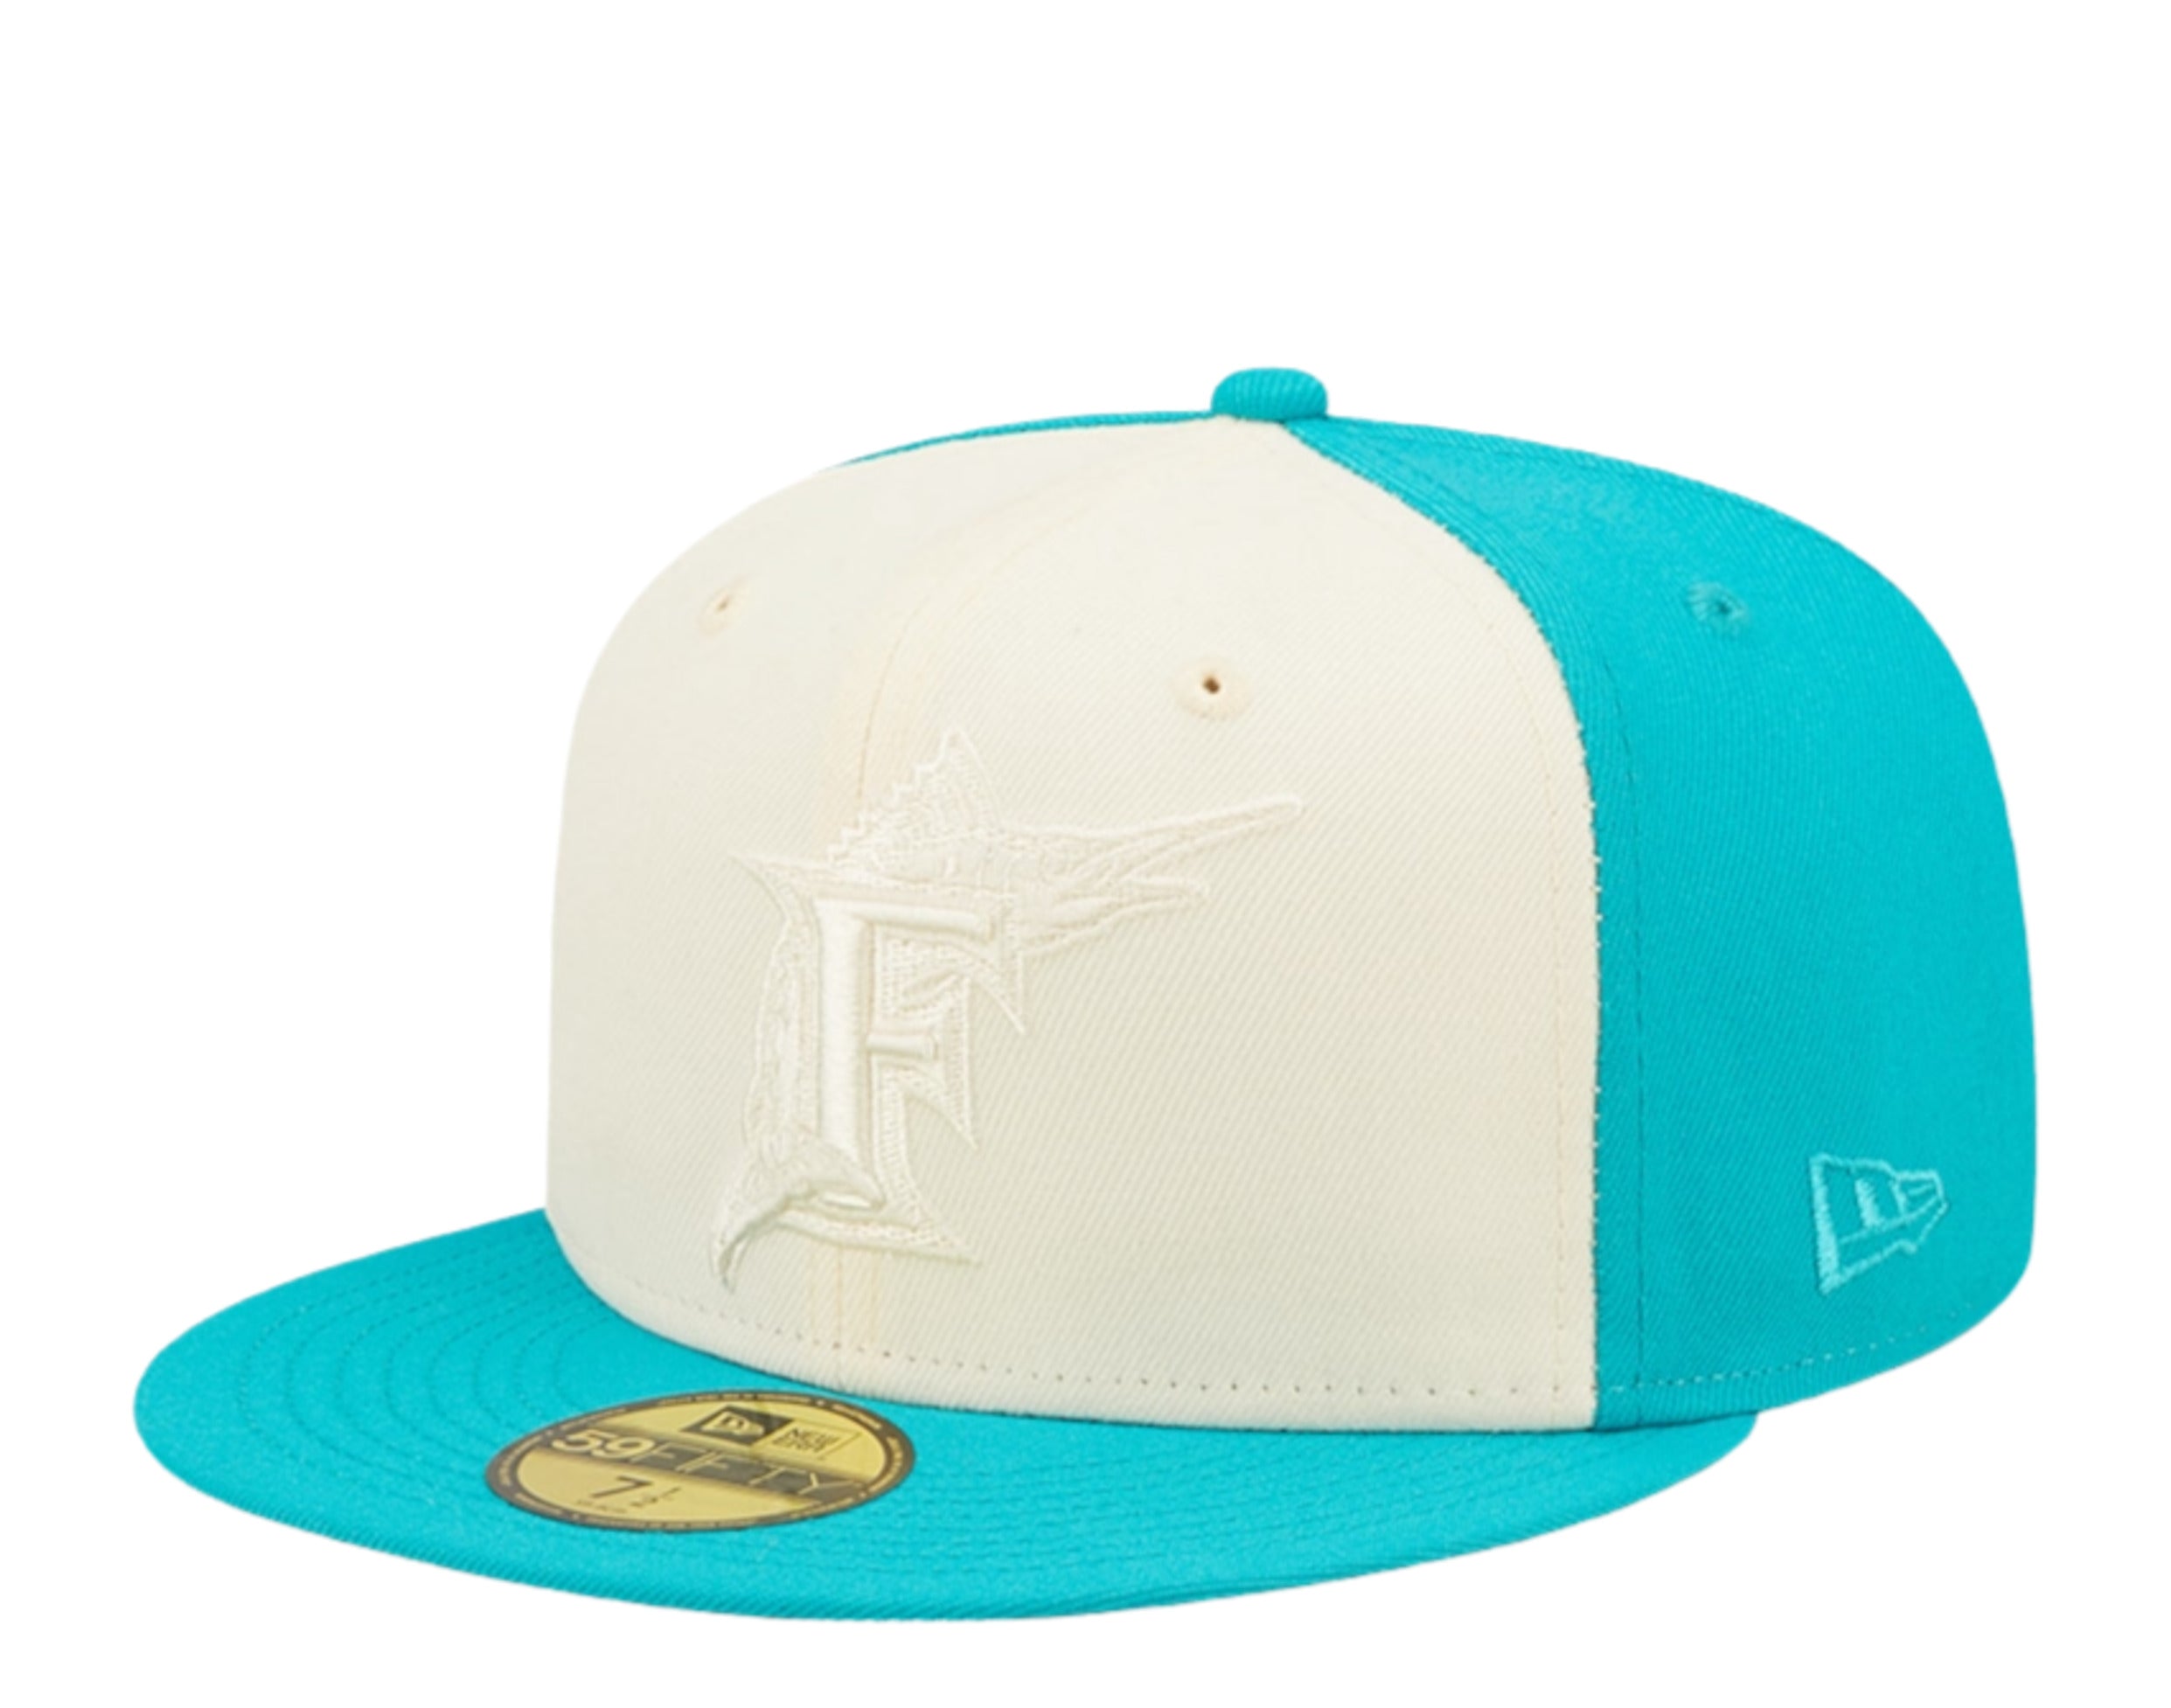 MLB Baseball Florida Marlins Foam Bat Light Weight Hat Headwear